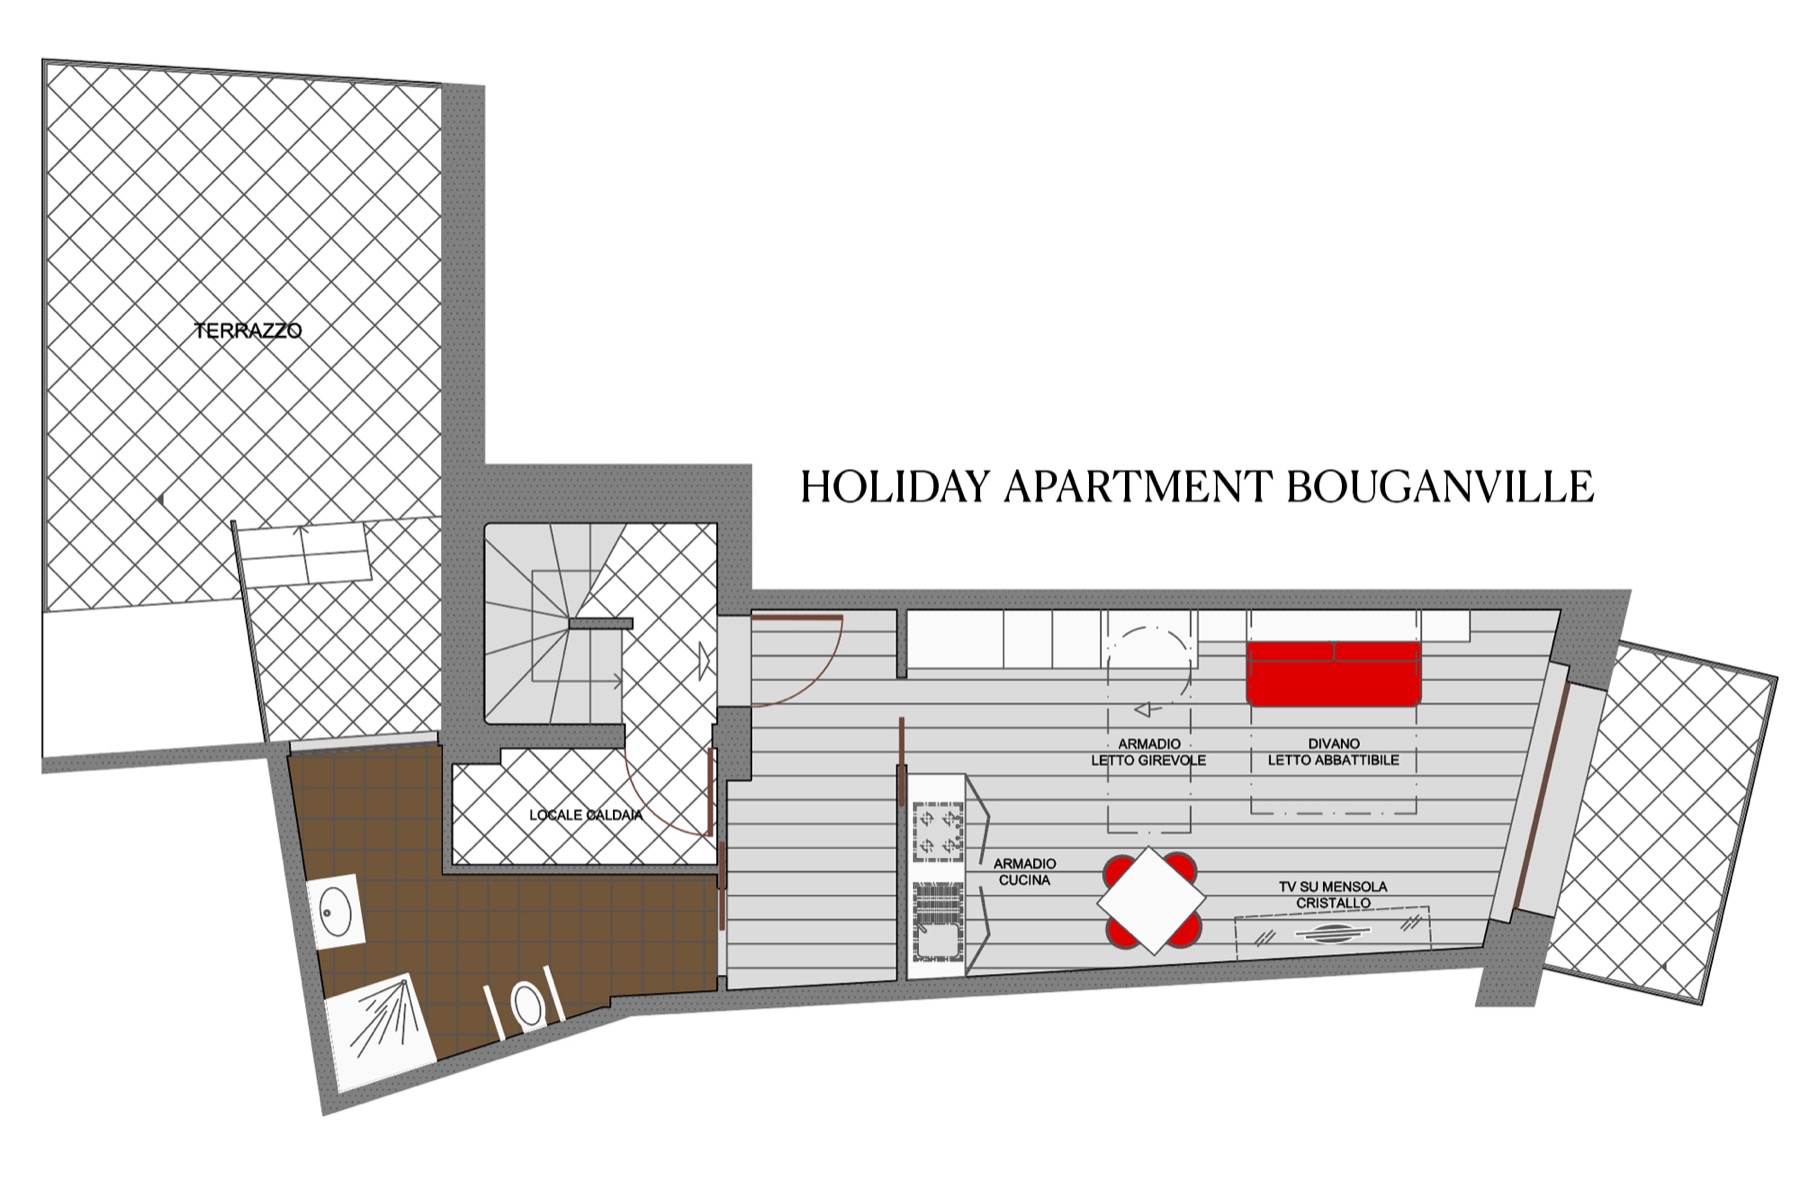 Bougainville Apartment Plan